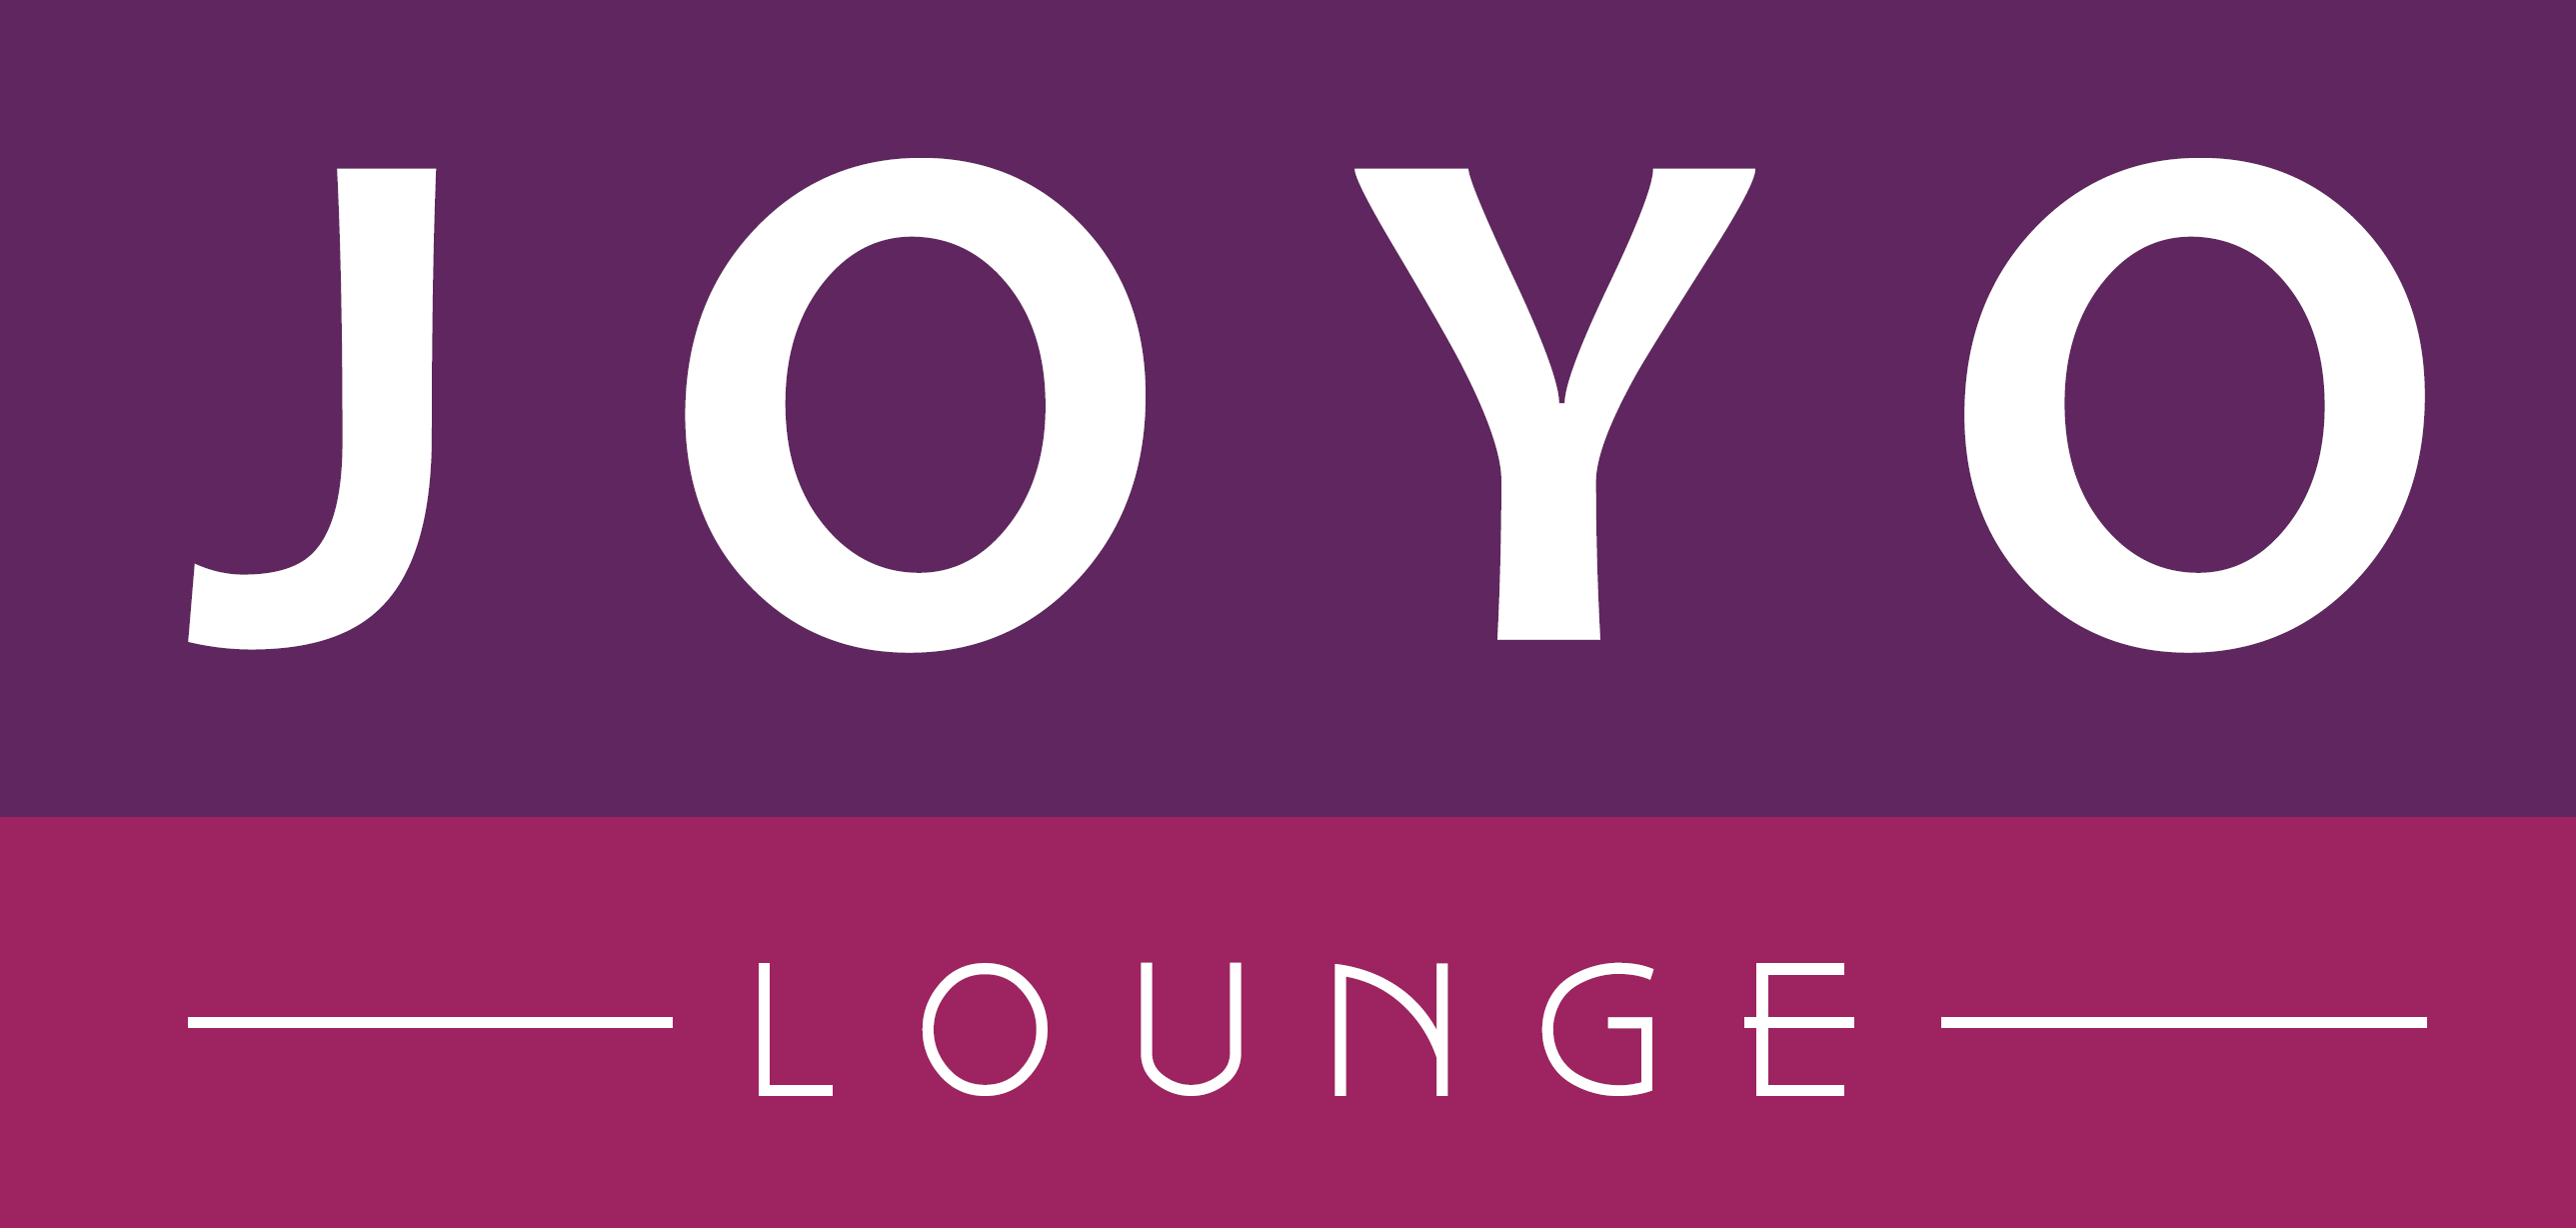 JOYO Lounge